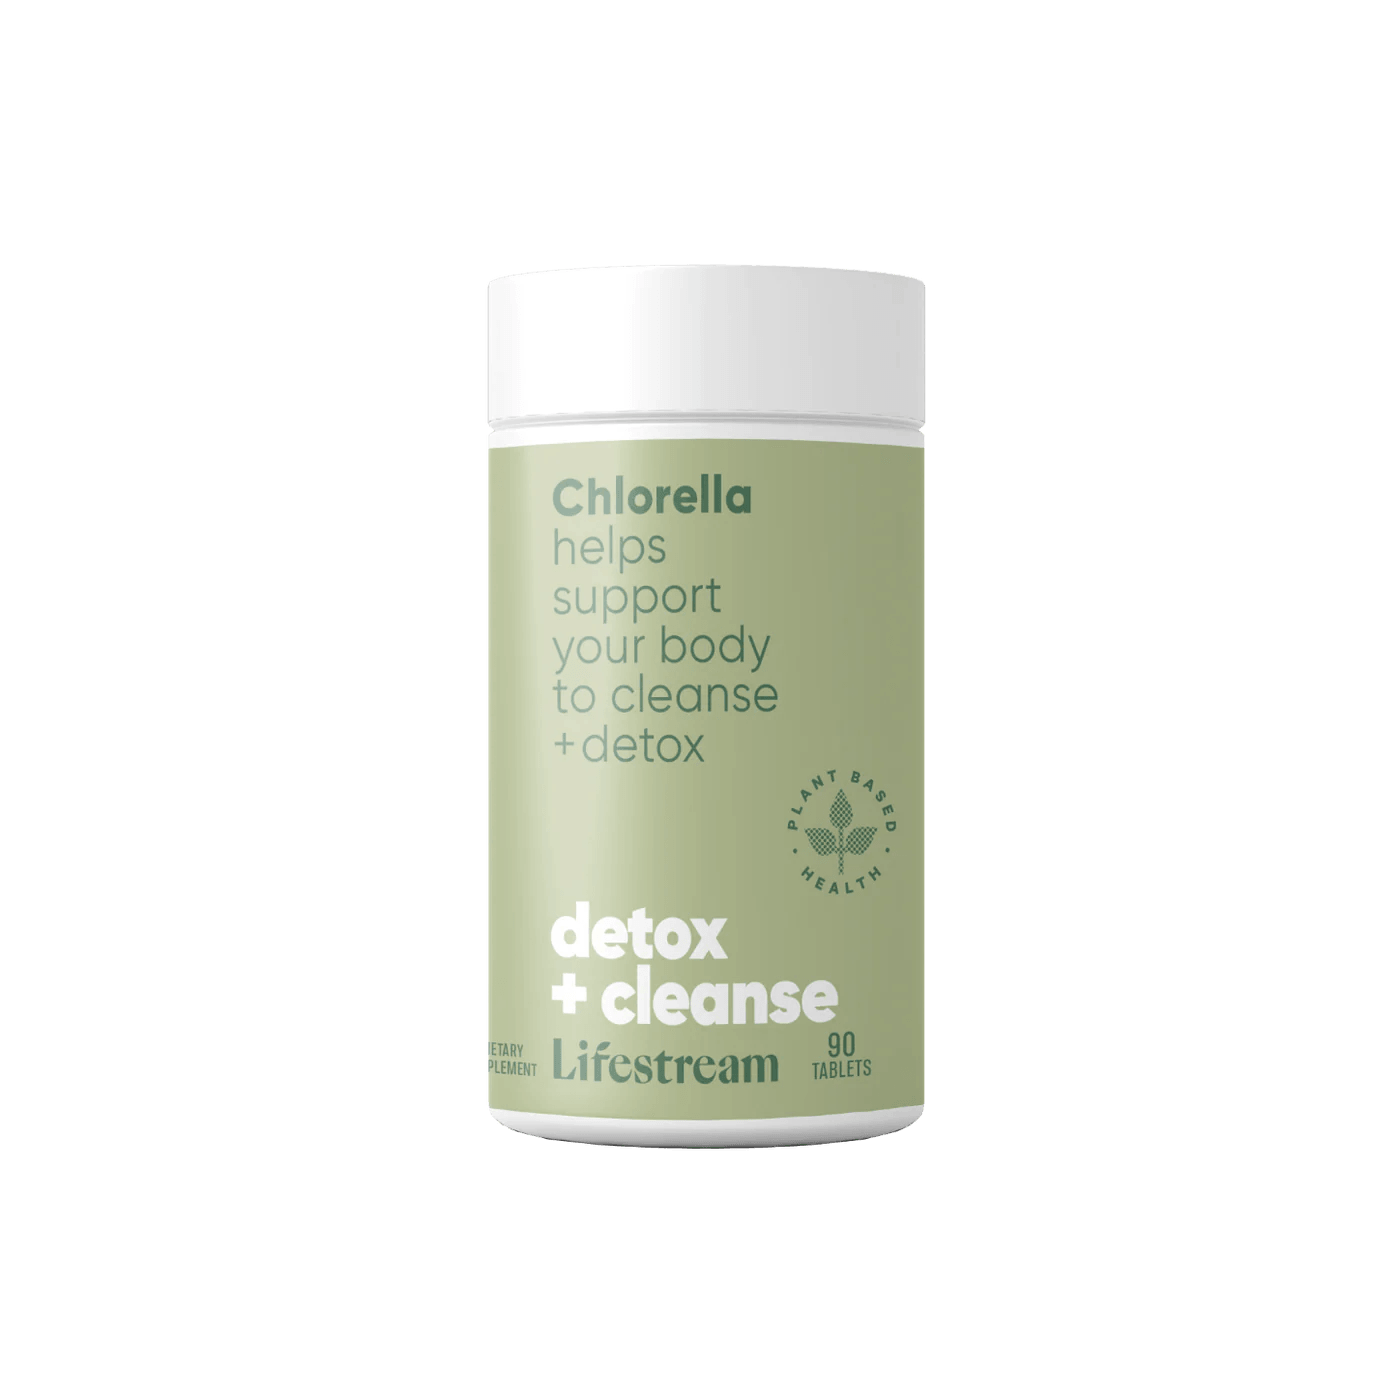 Lifestream Chlorella detox + cleanse 500mg 90 Tablets